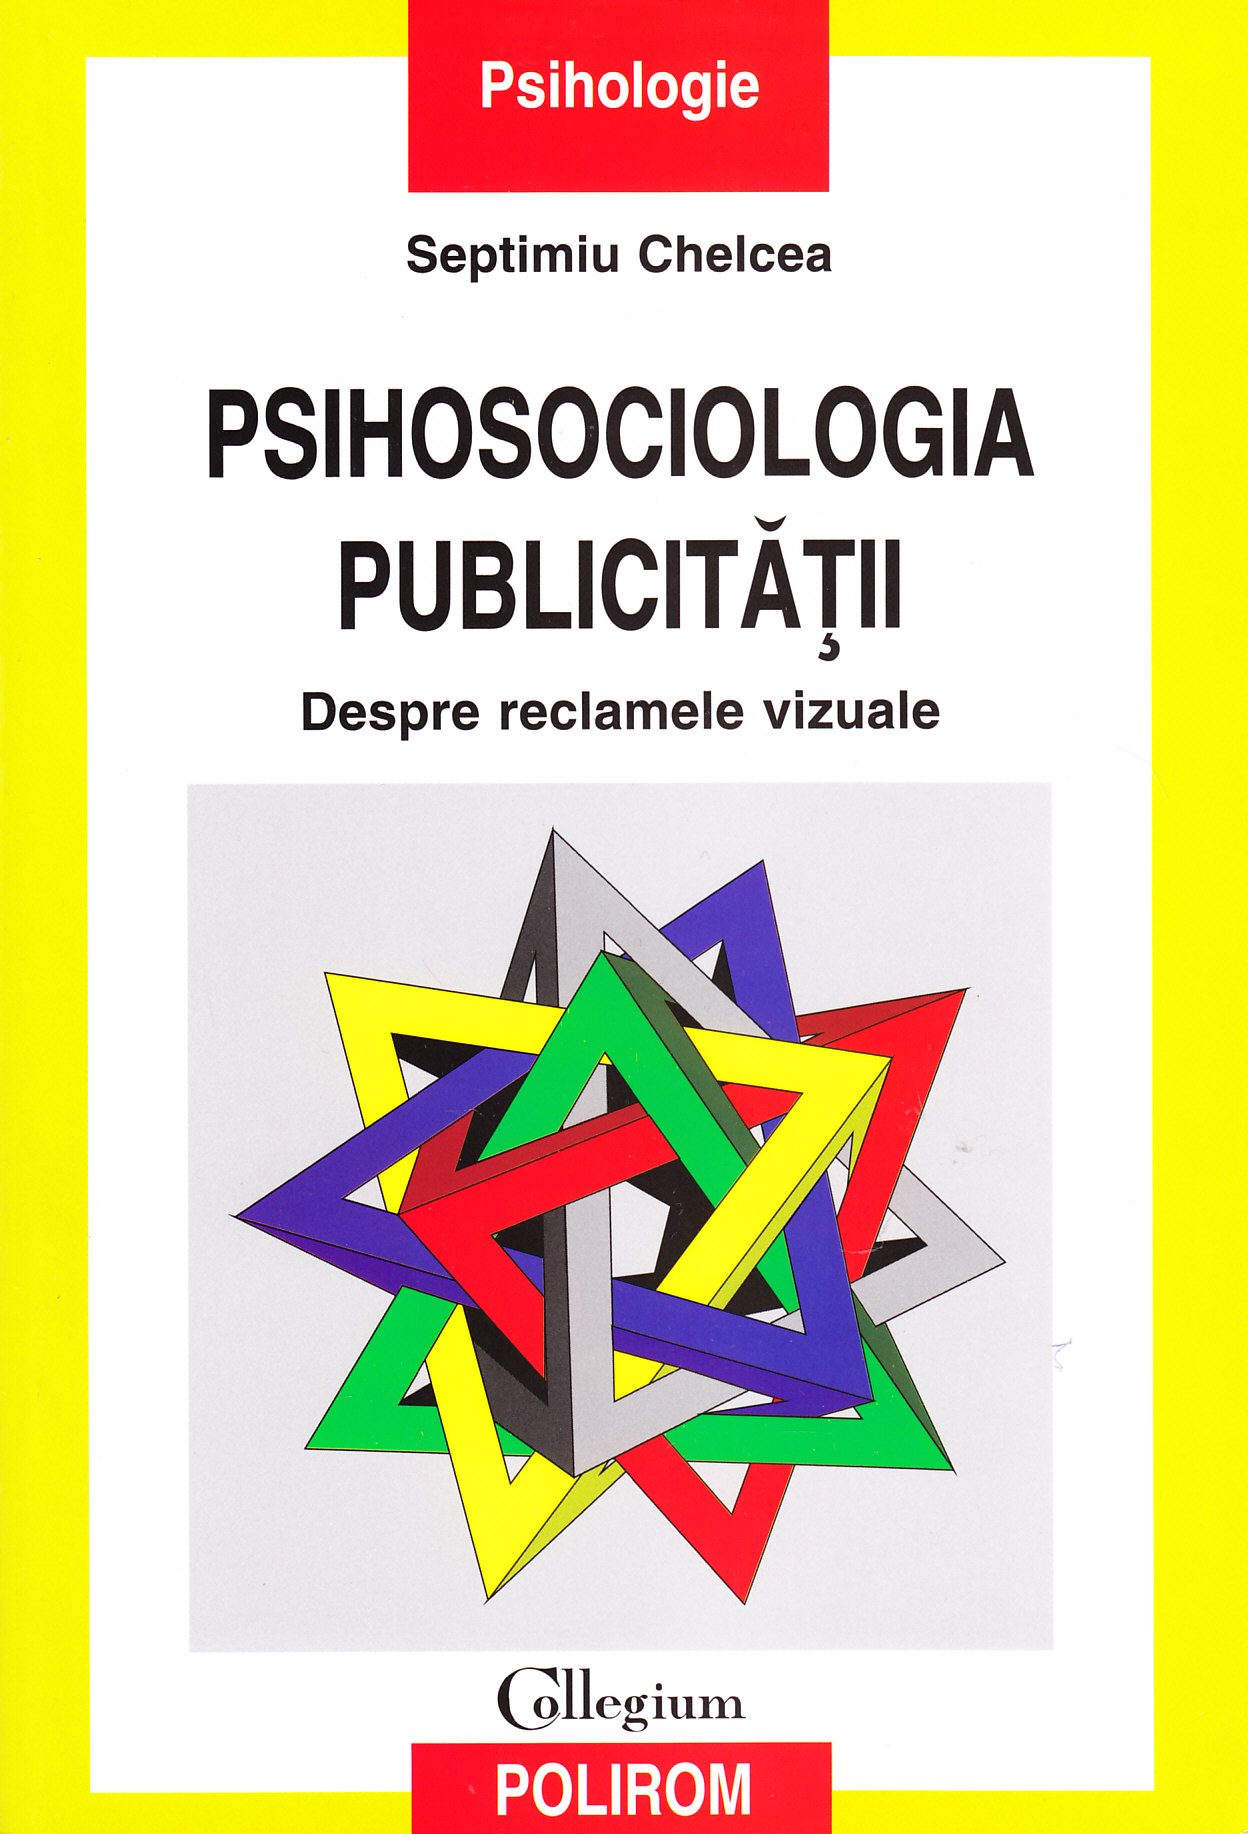 Psihosociologia publicitatii - Septimiu Chelcea